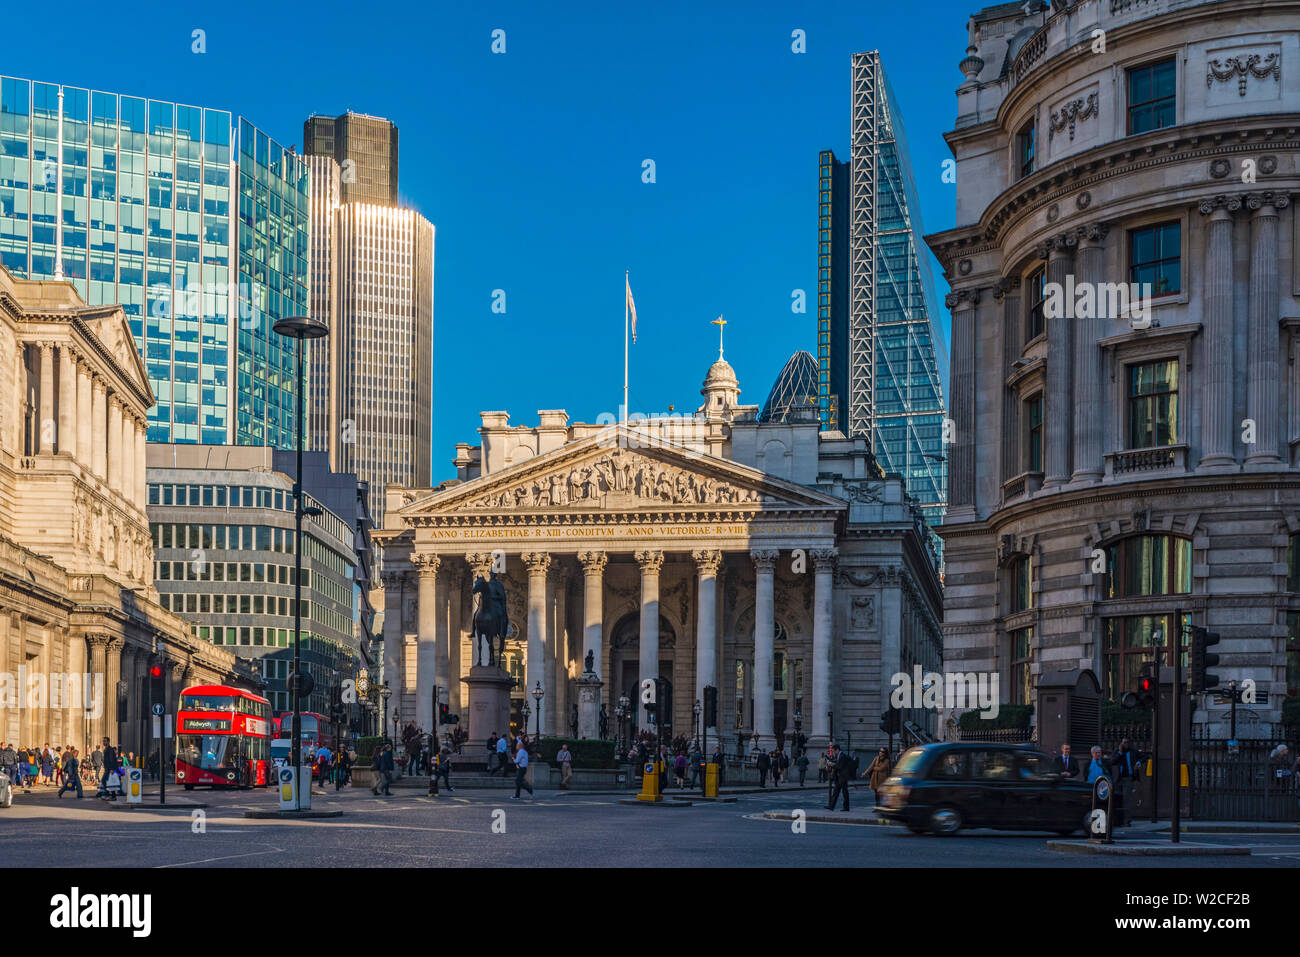 Regno Unito, Inghilterra, Londra, la città, la Bank of England (sinistra) e il Royal Exchange, torre 42 (ex NatWest Torre) e l'Cheesegrater (122 Leadenhall Street) in background Foto Stock